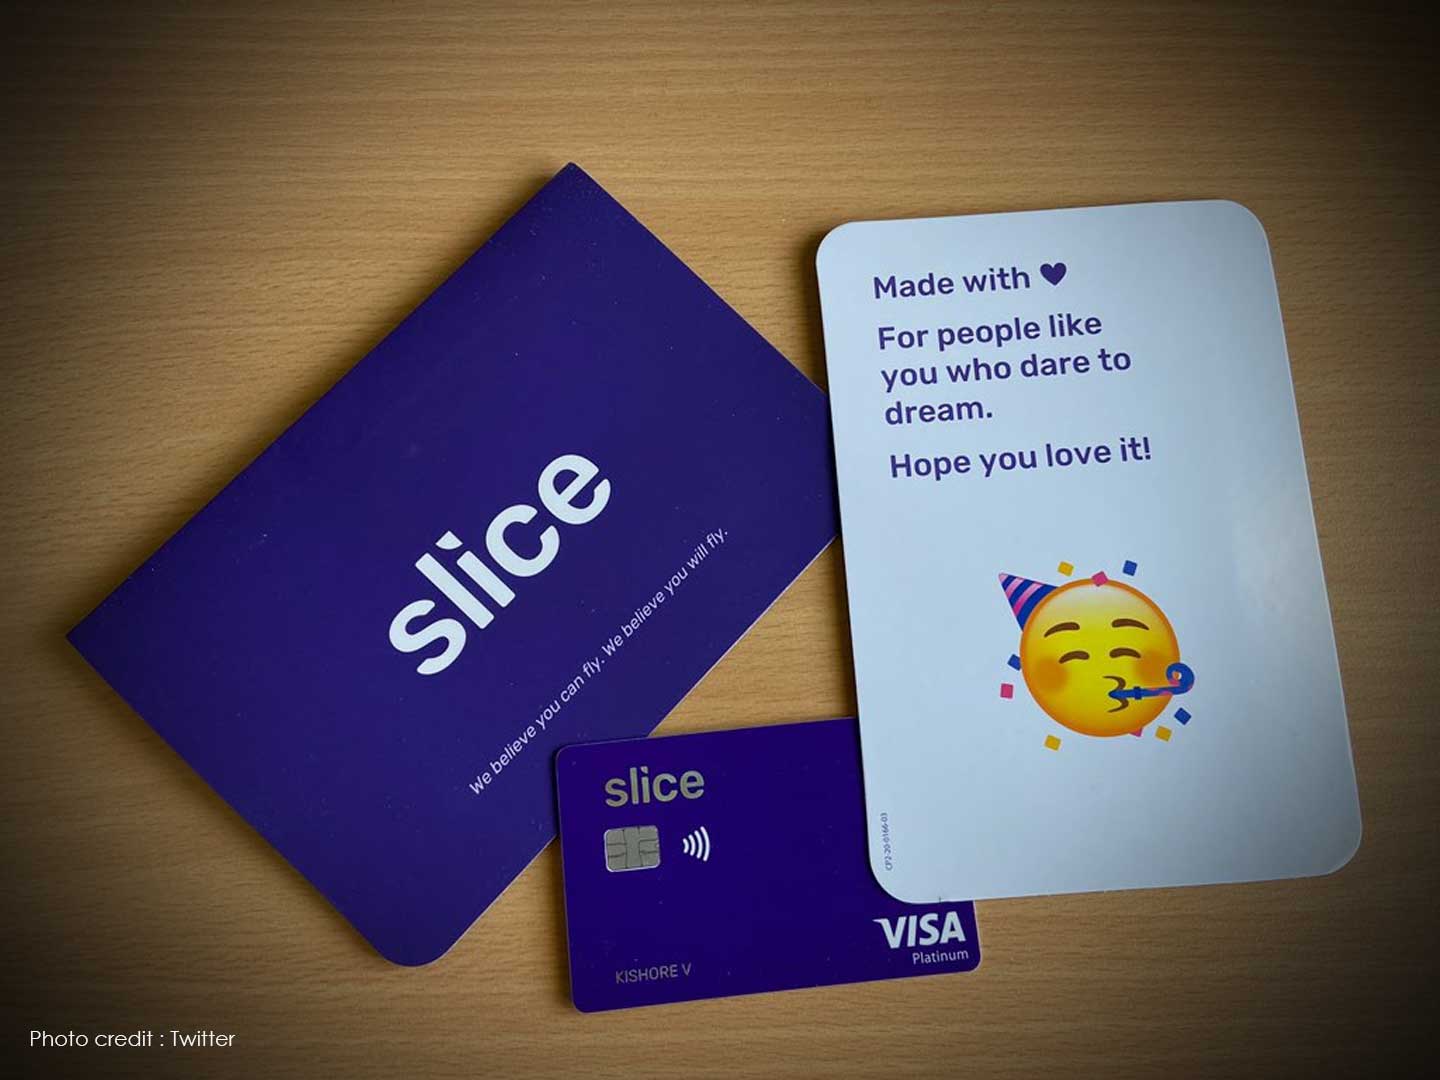 slice credit card